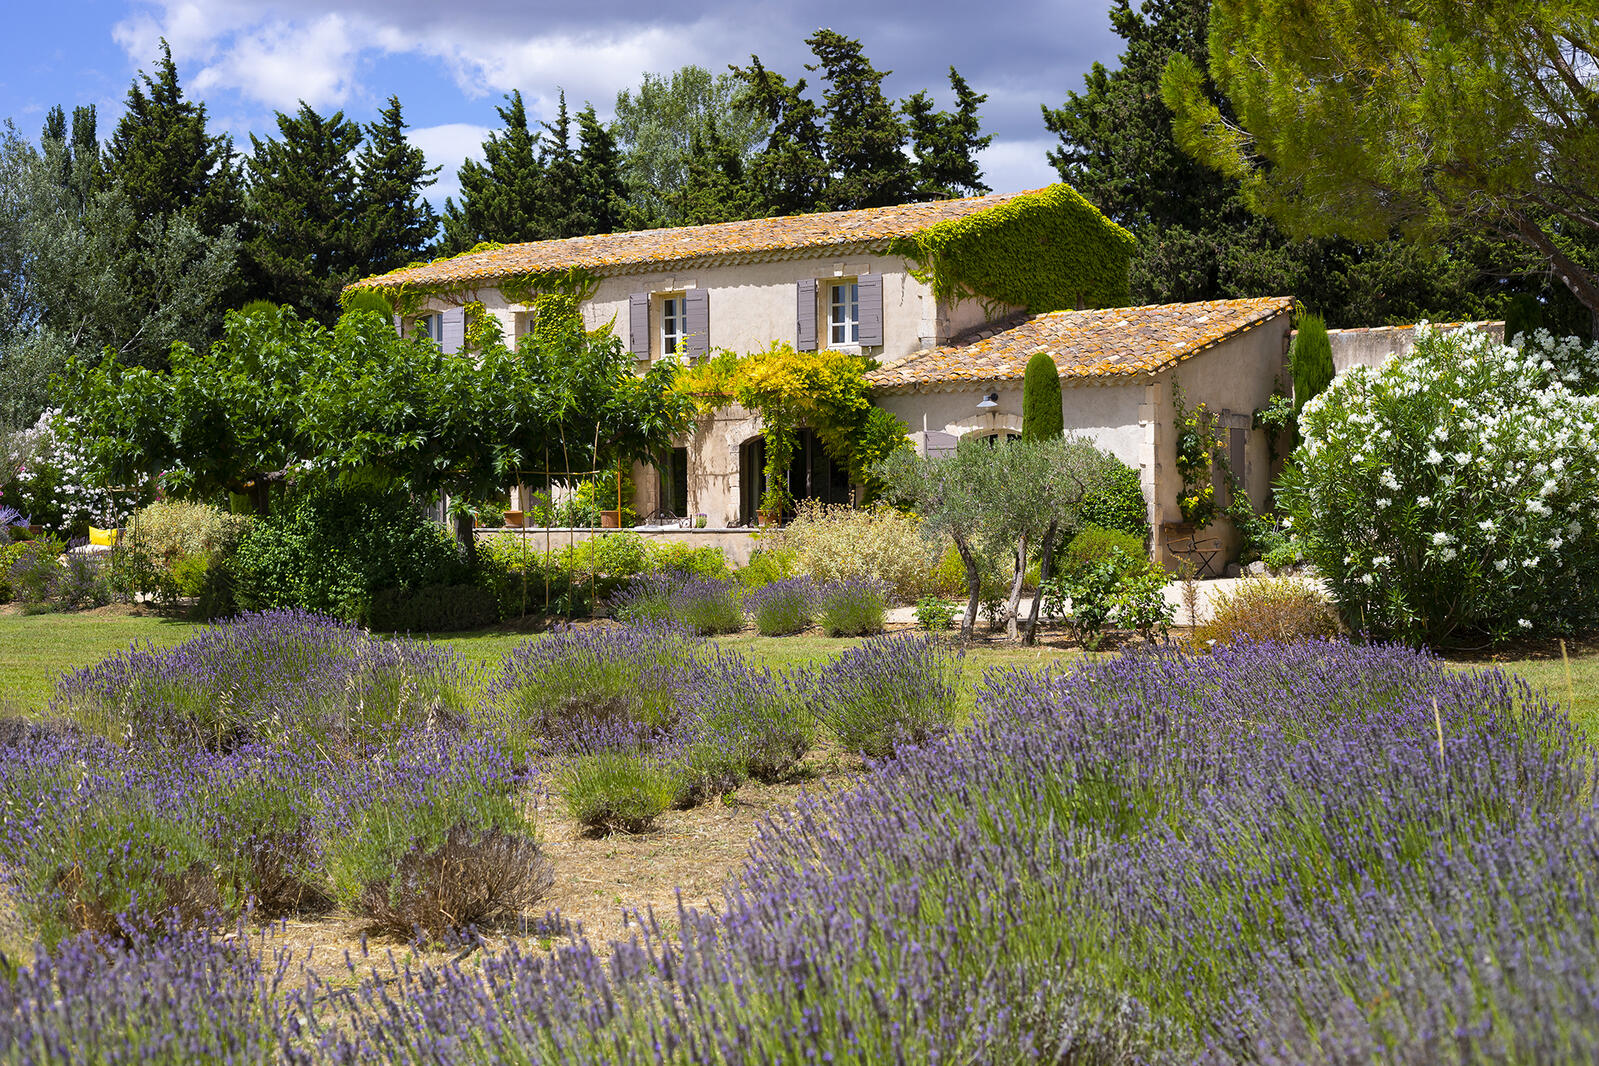 Ferienhäuser in der Provence